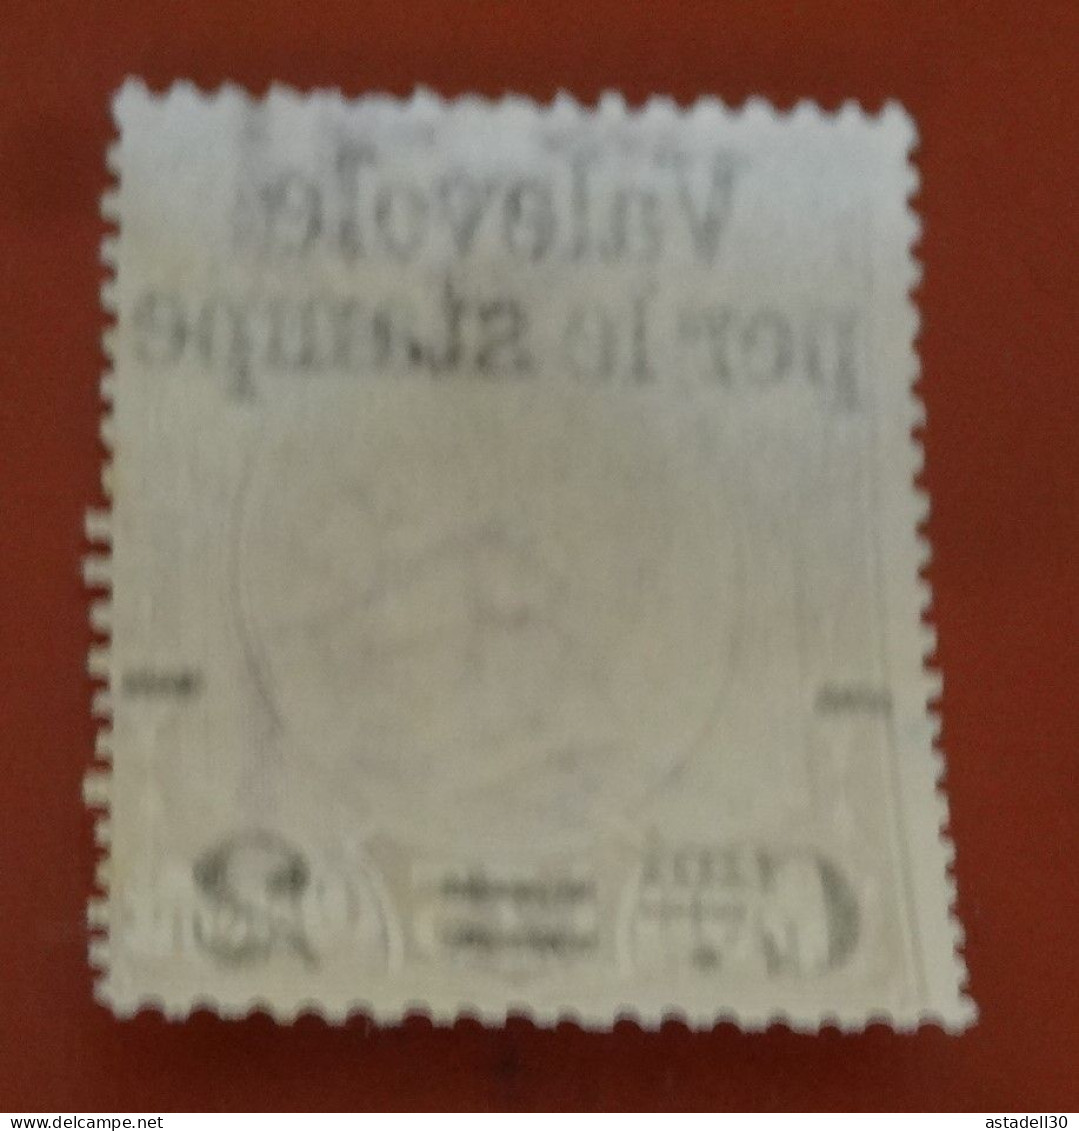 ITALIA - ITALIE Parcel Stamp 2c / 1.75c Marron - 1890, Mint NO GUM  ............ CL1-1-1b - Paquetes Postales